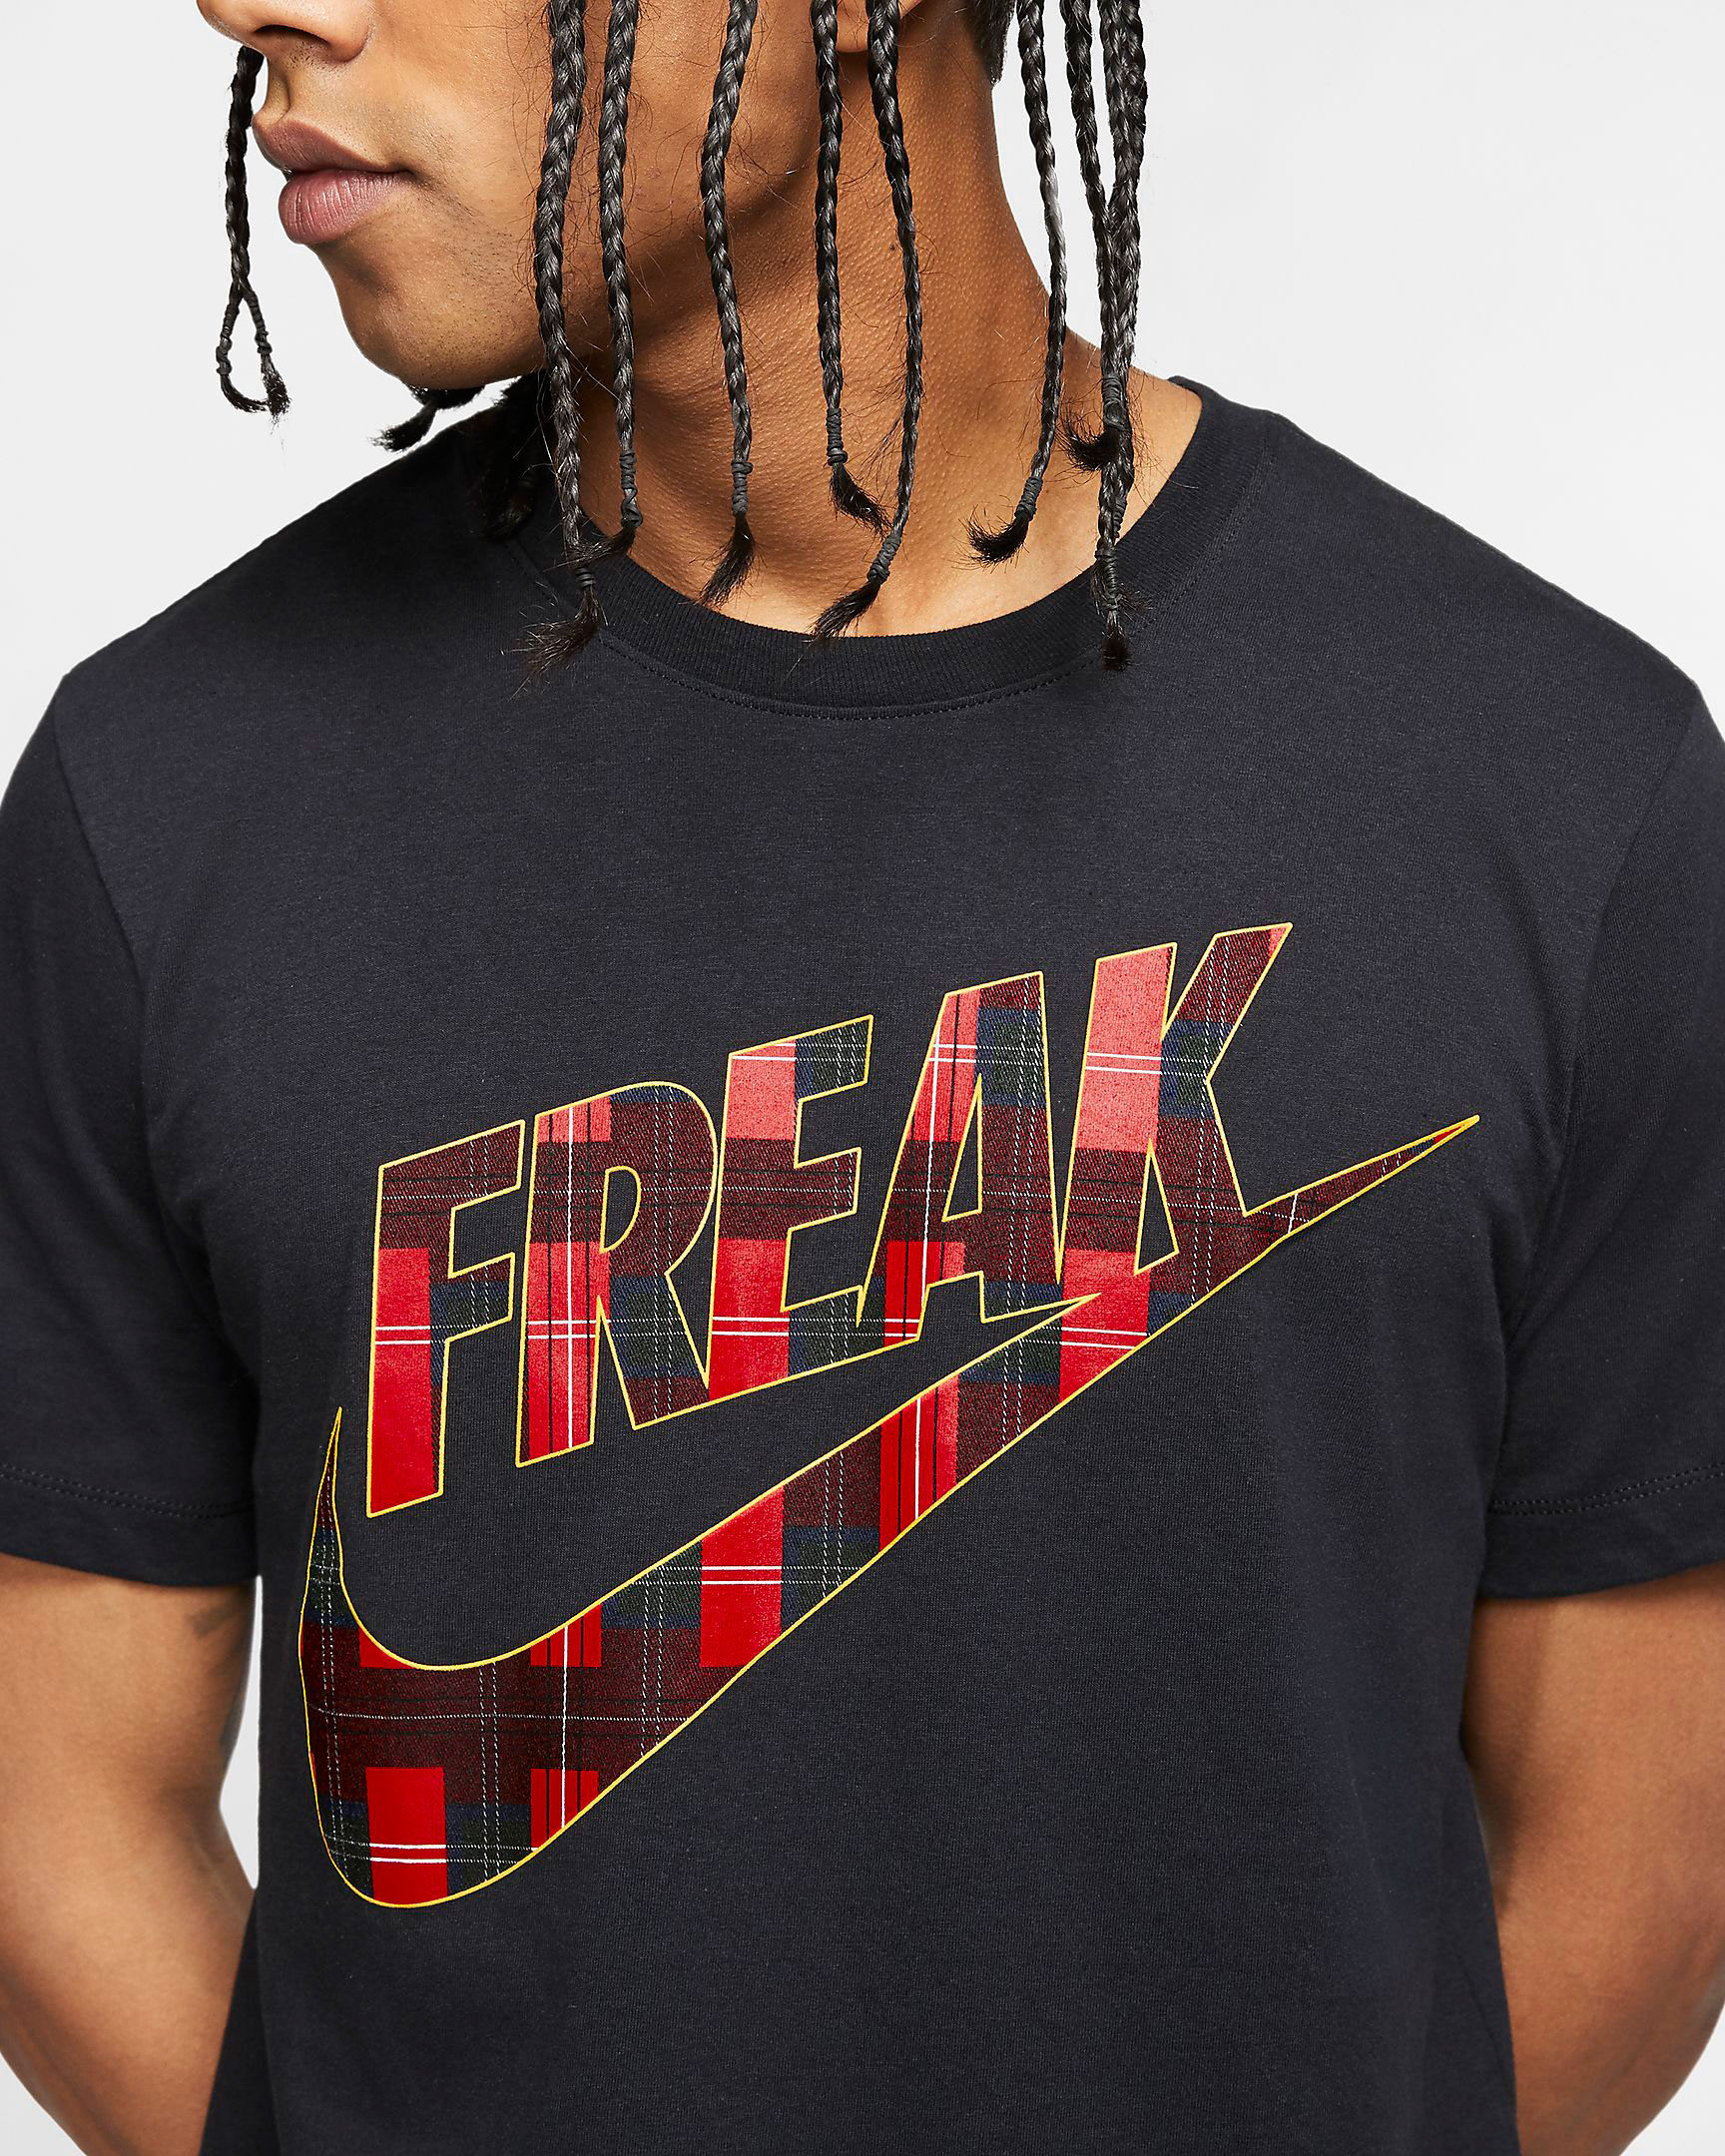 greek freak t shirt nike